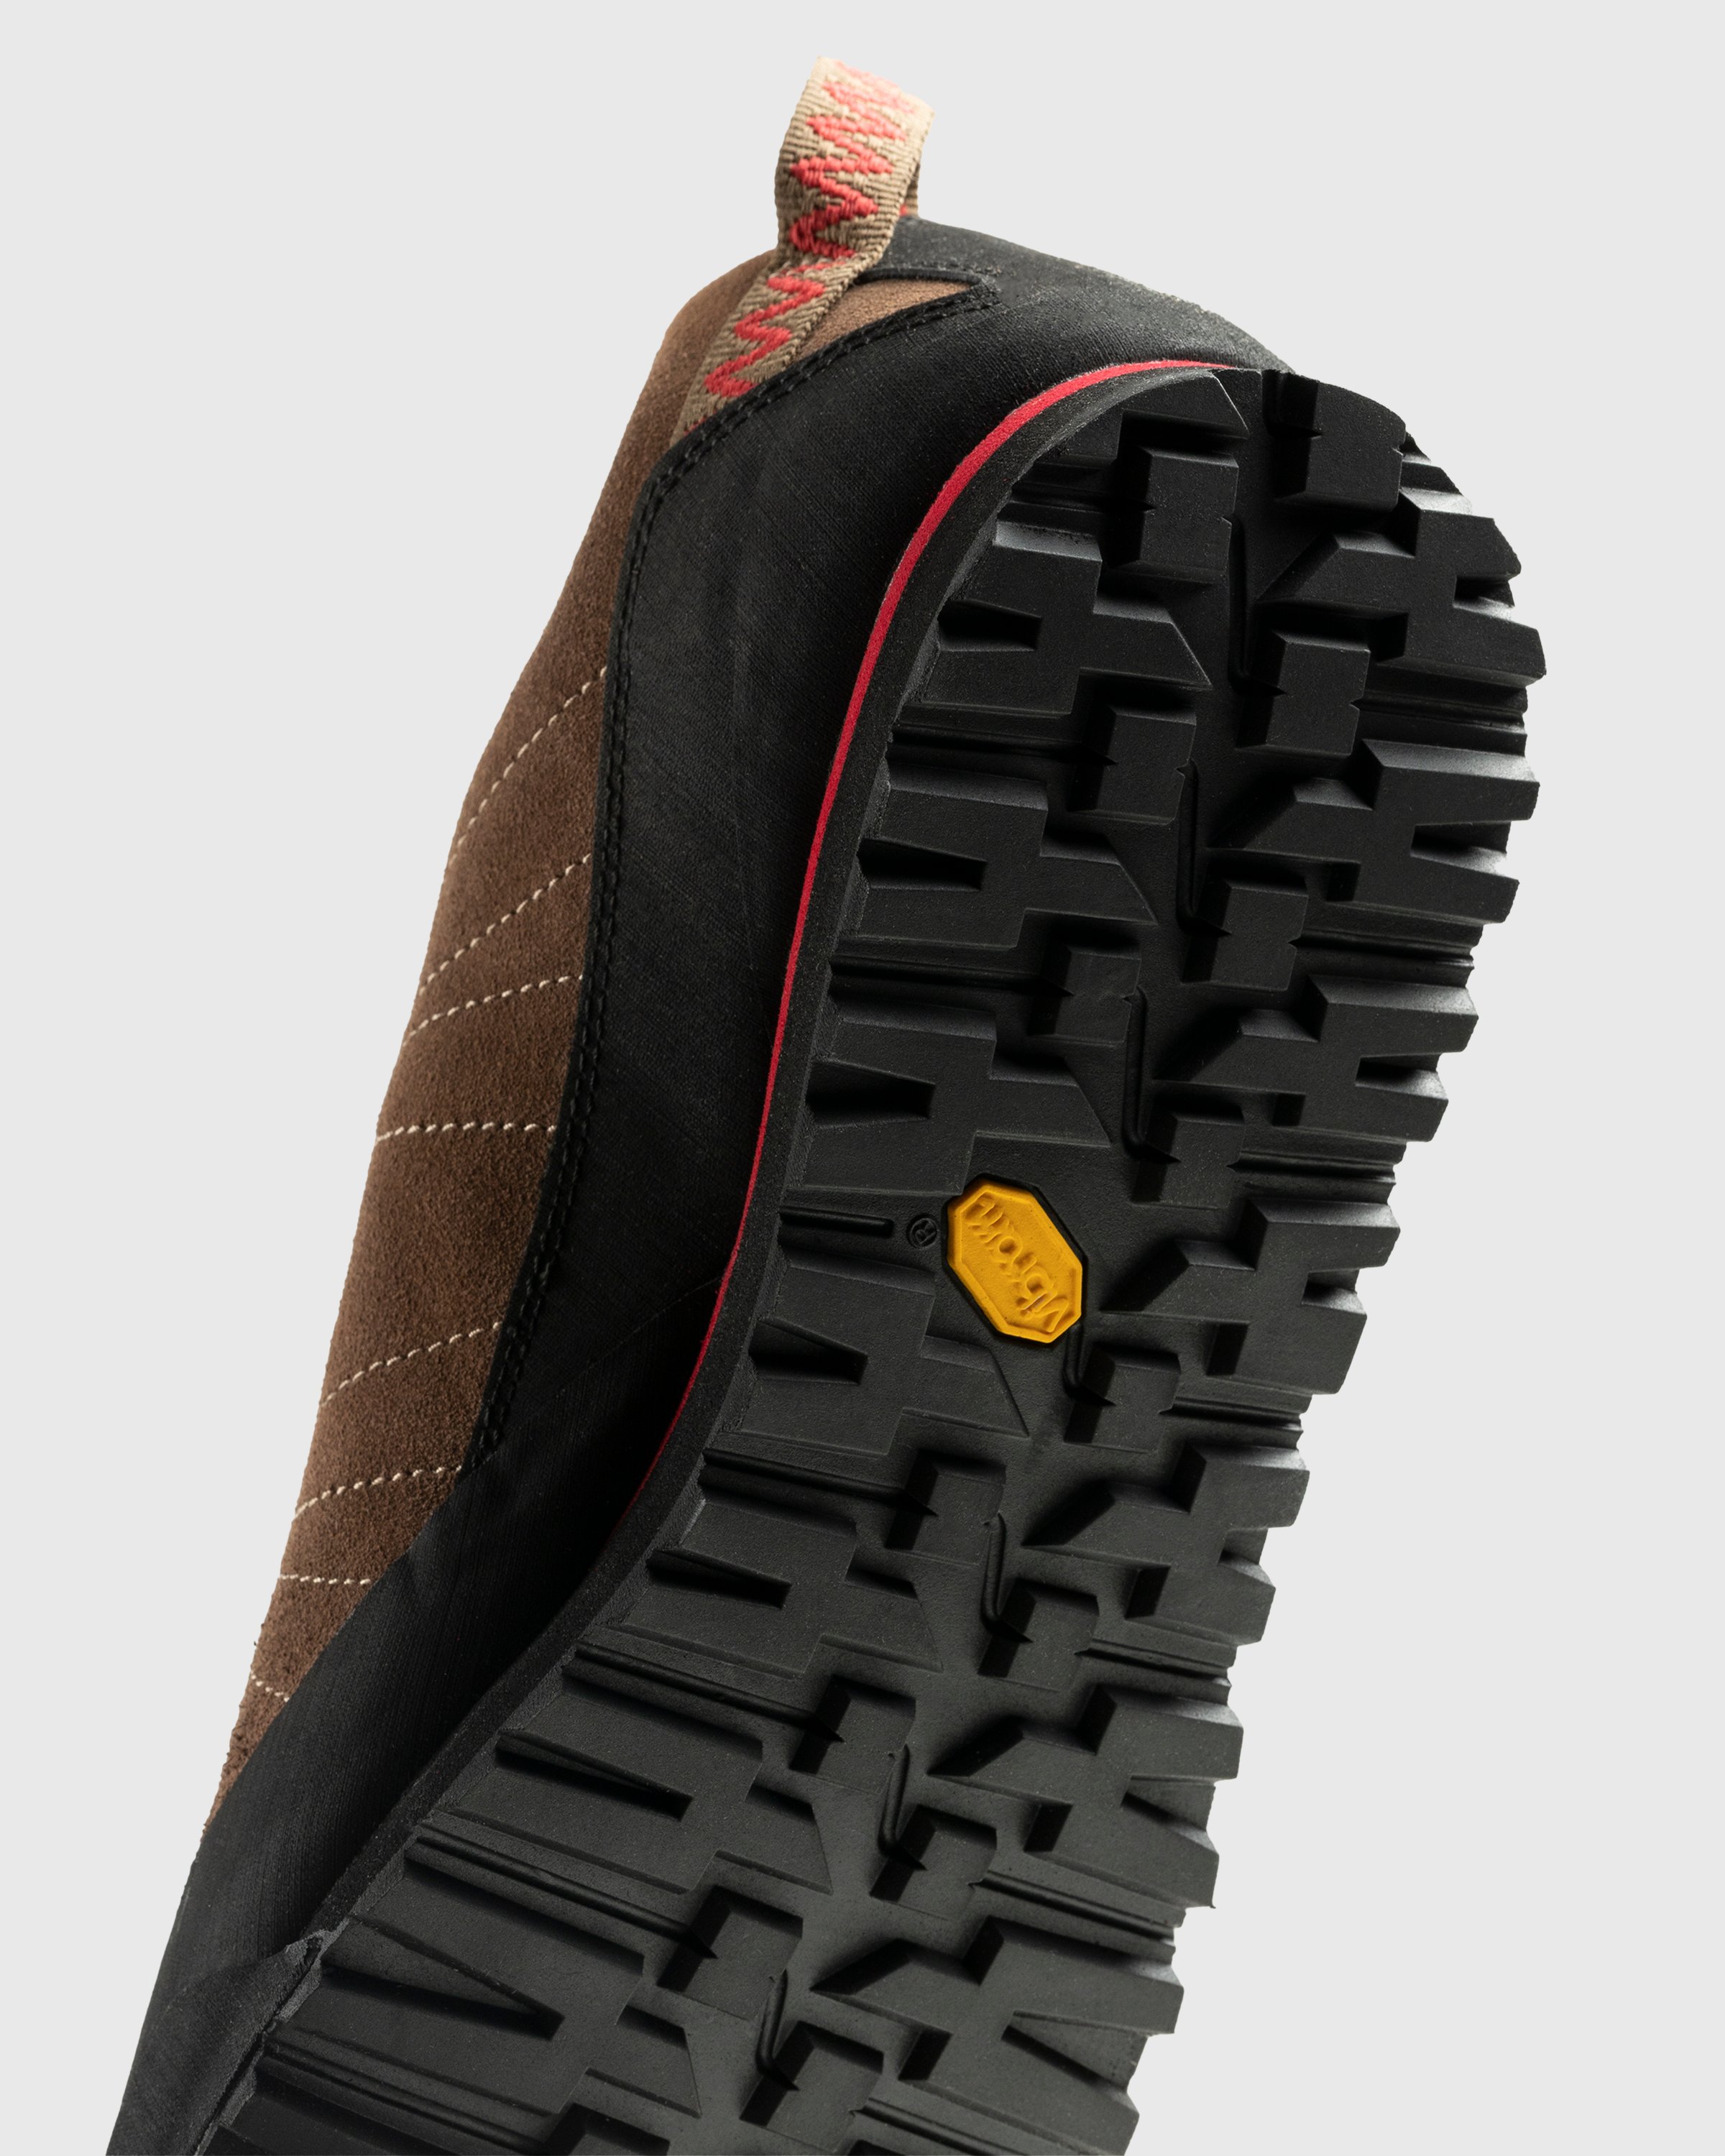 Merrell - Catalyst Pro Earth - Footwear - Brown - Image 6